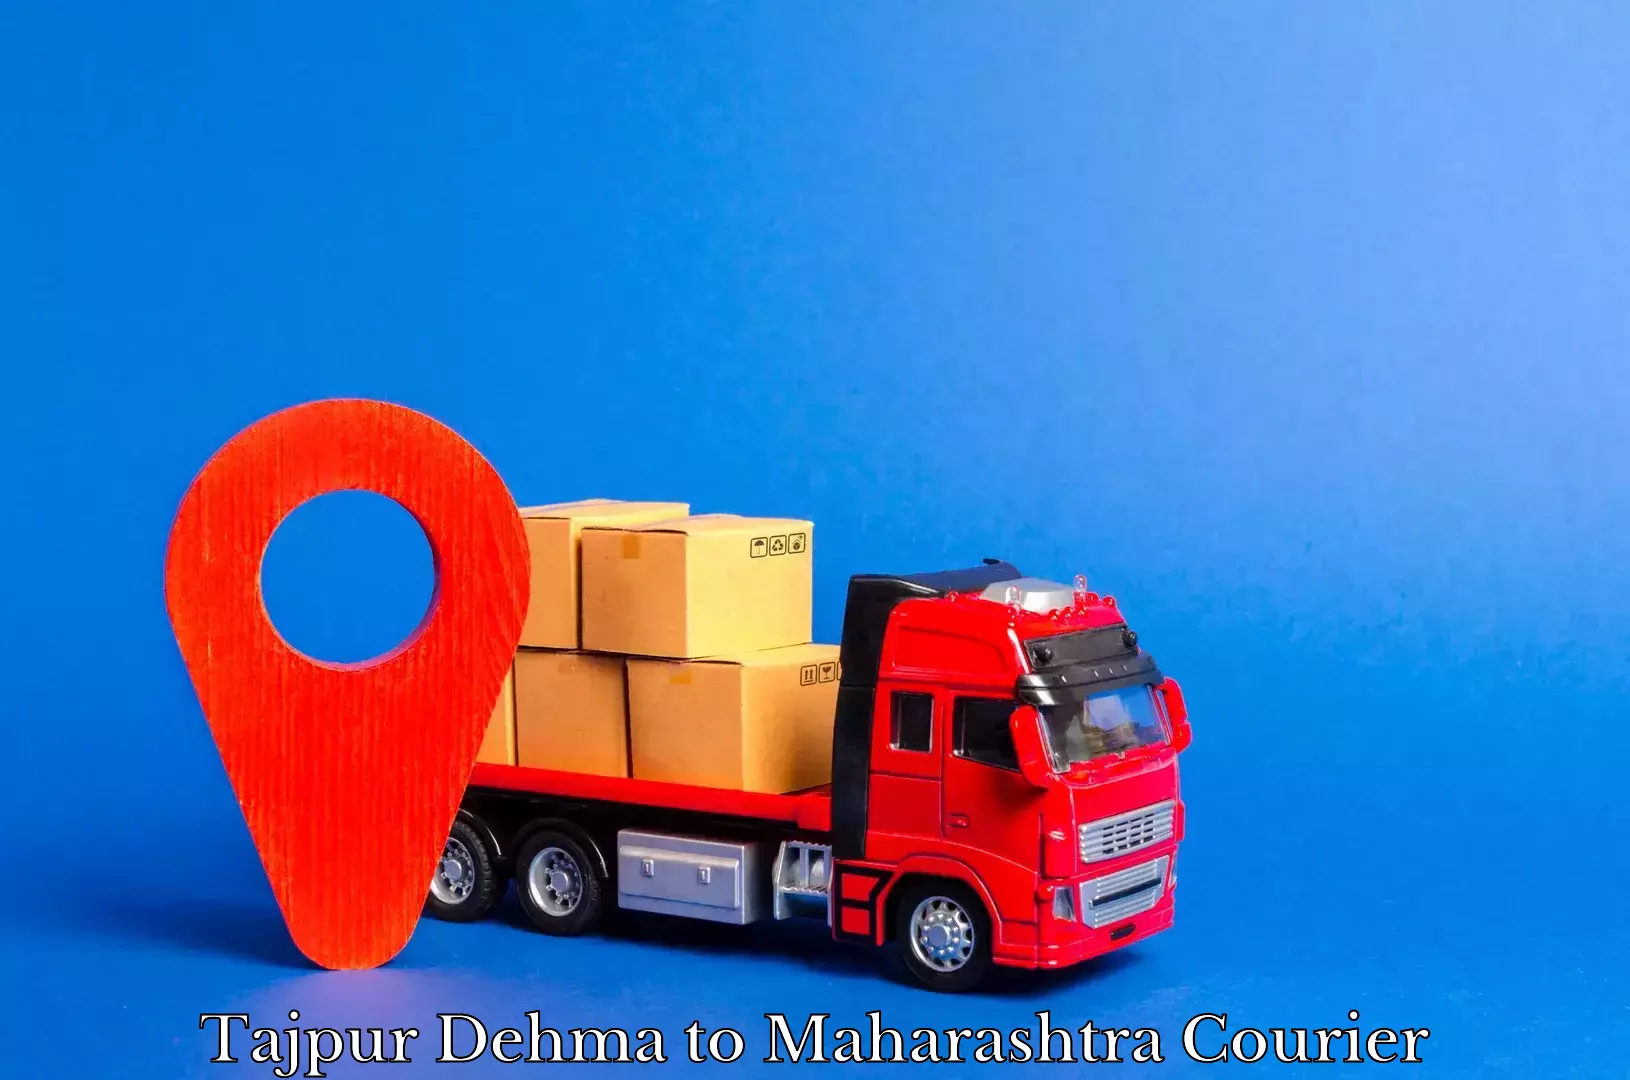 Multi-national courier services Tajpur Dehma to Maharashtra